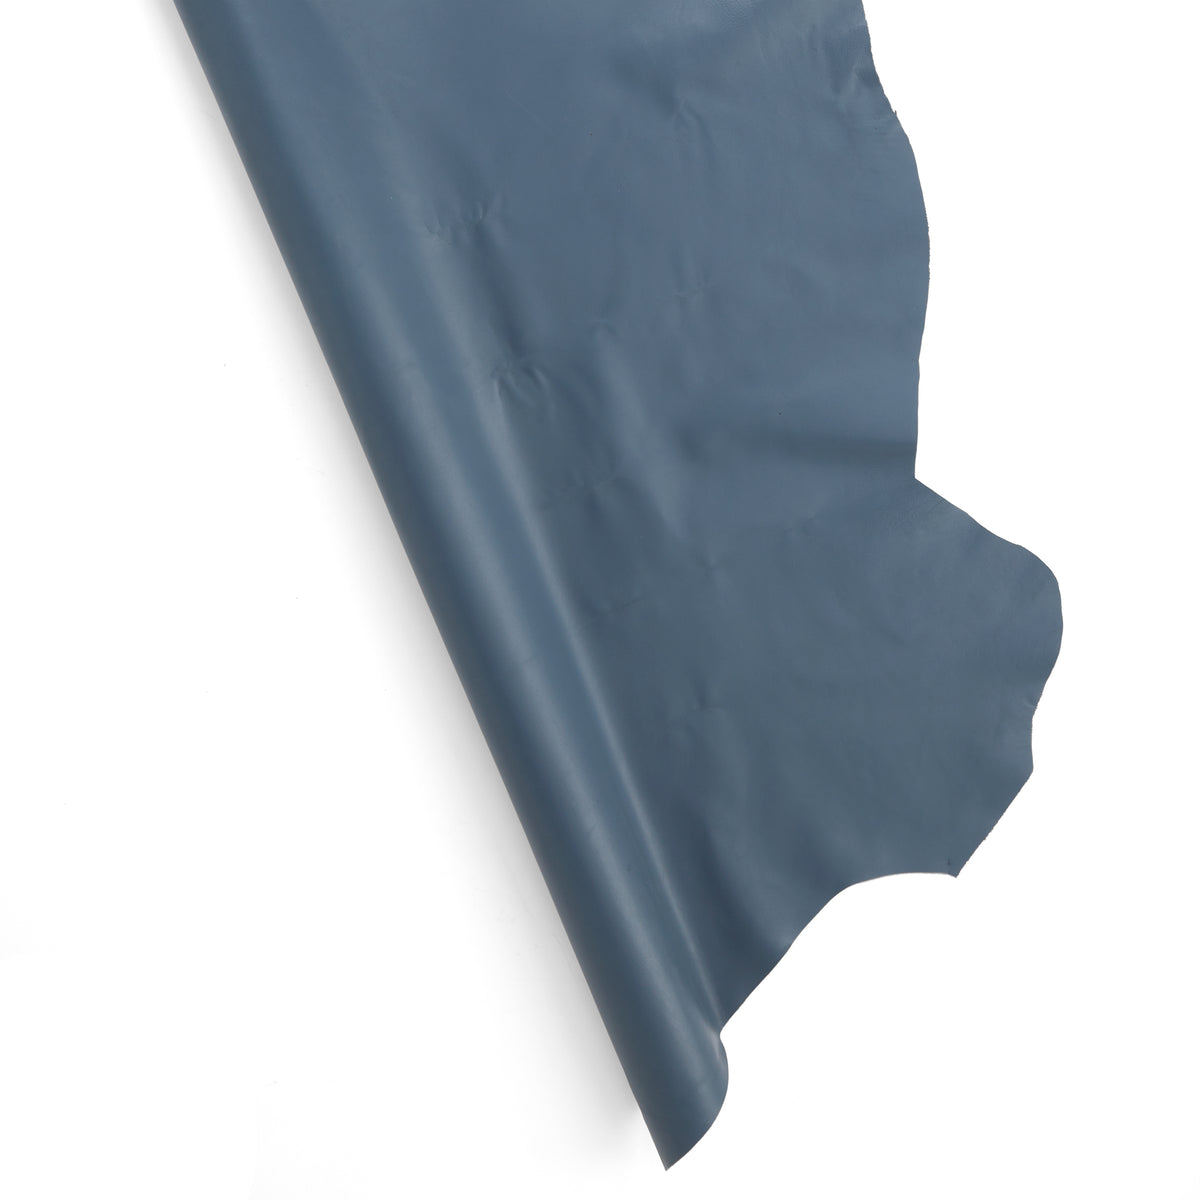 Designer Small Skin Blue Quartz — Tandy Leather, Inc.